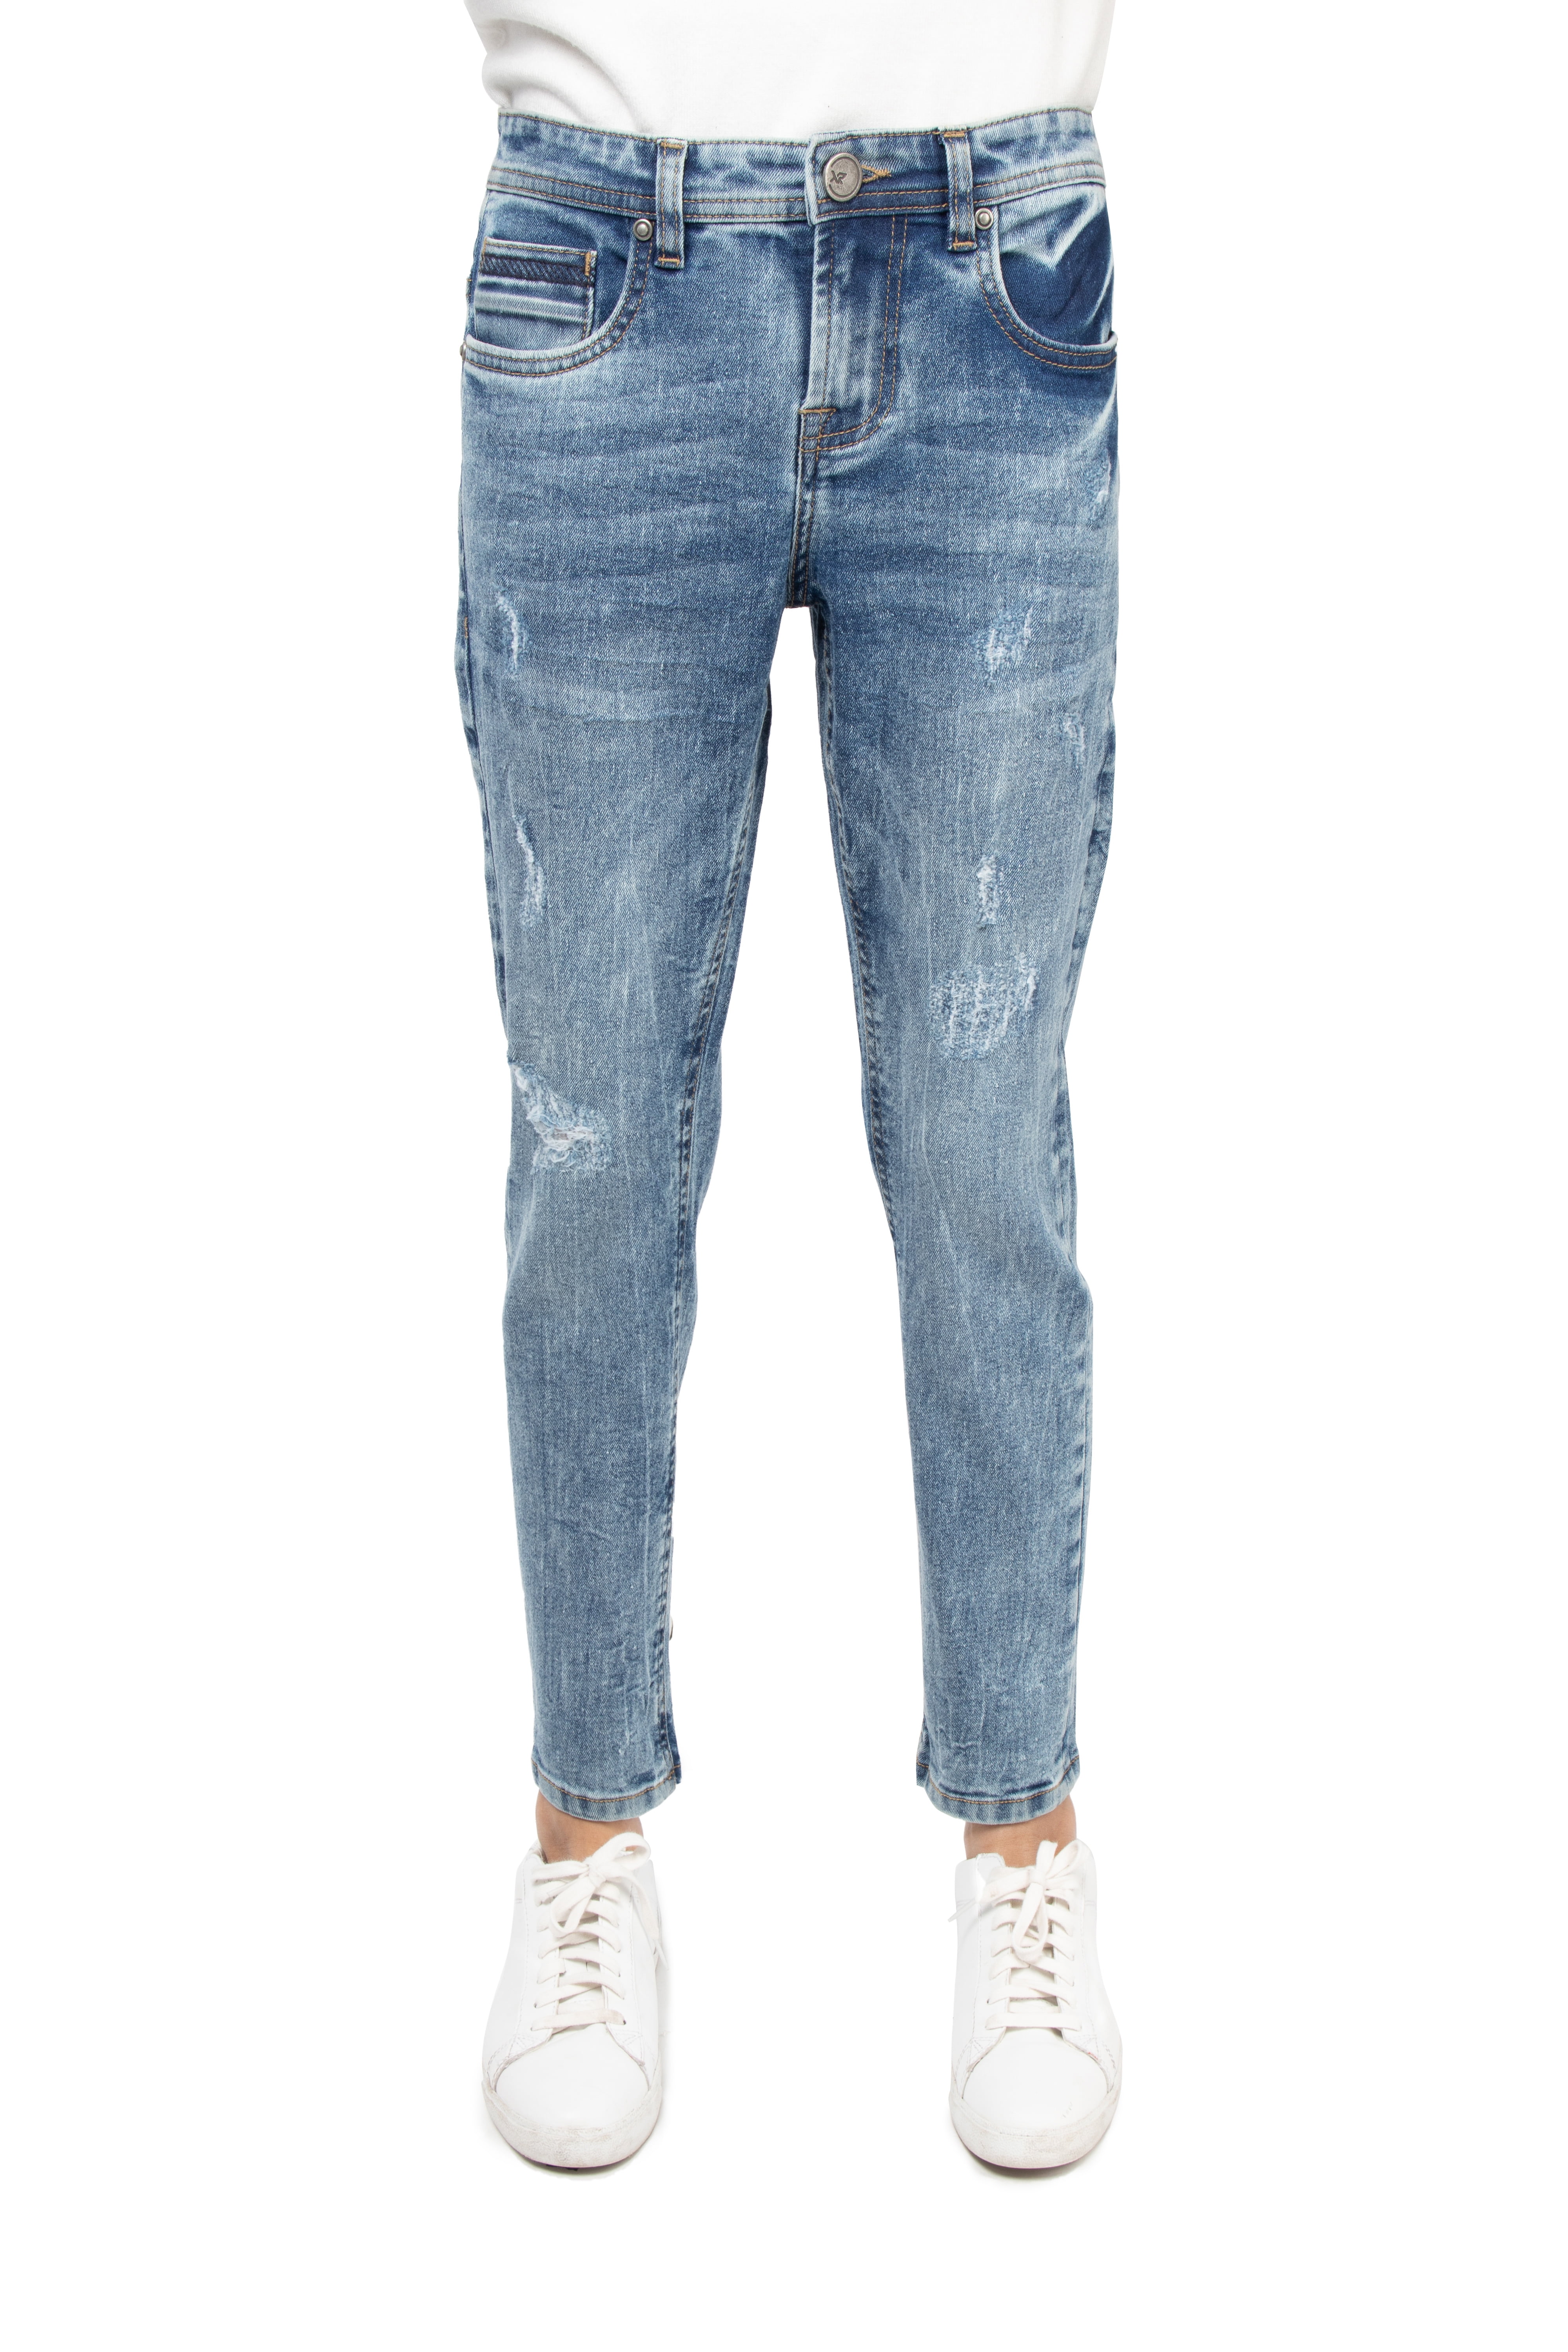 X Skinny Jeans for Slim Fit Denim Pants, Blue Distressed - Knee Rips, Husky - Walmart.com